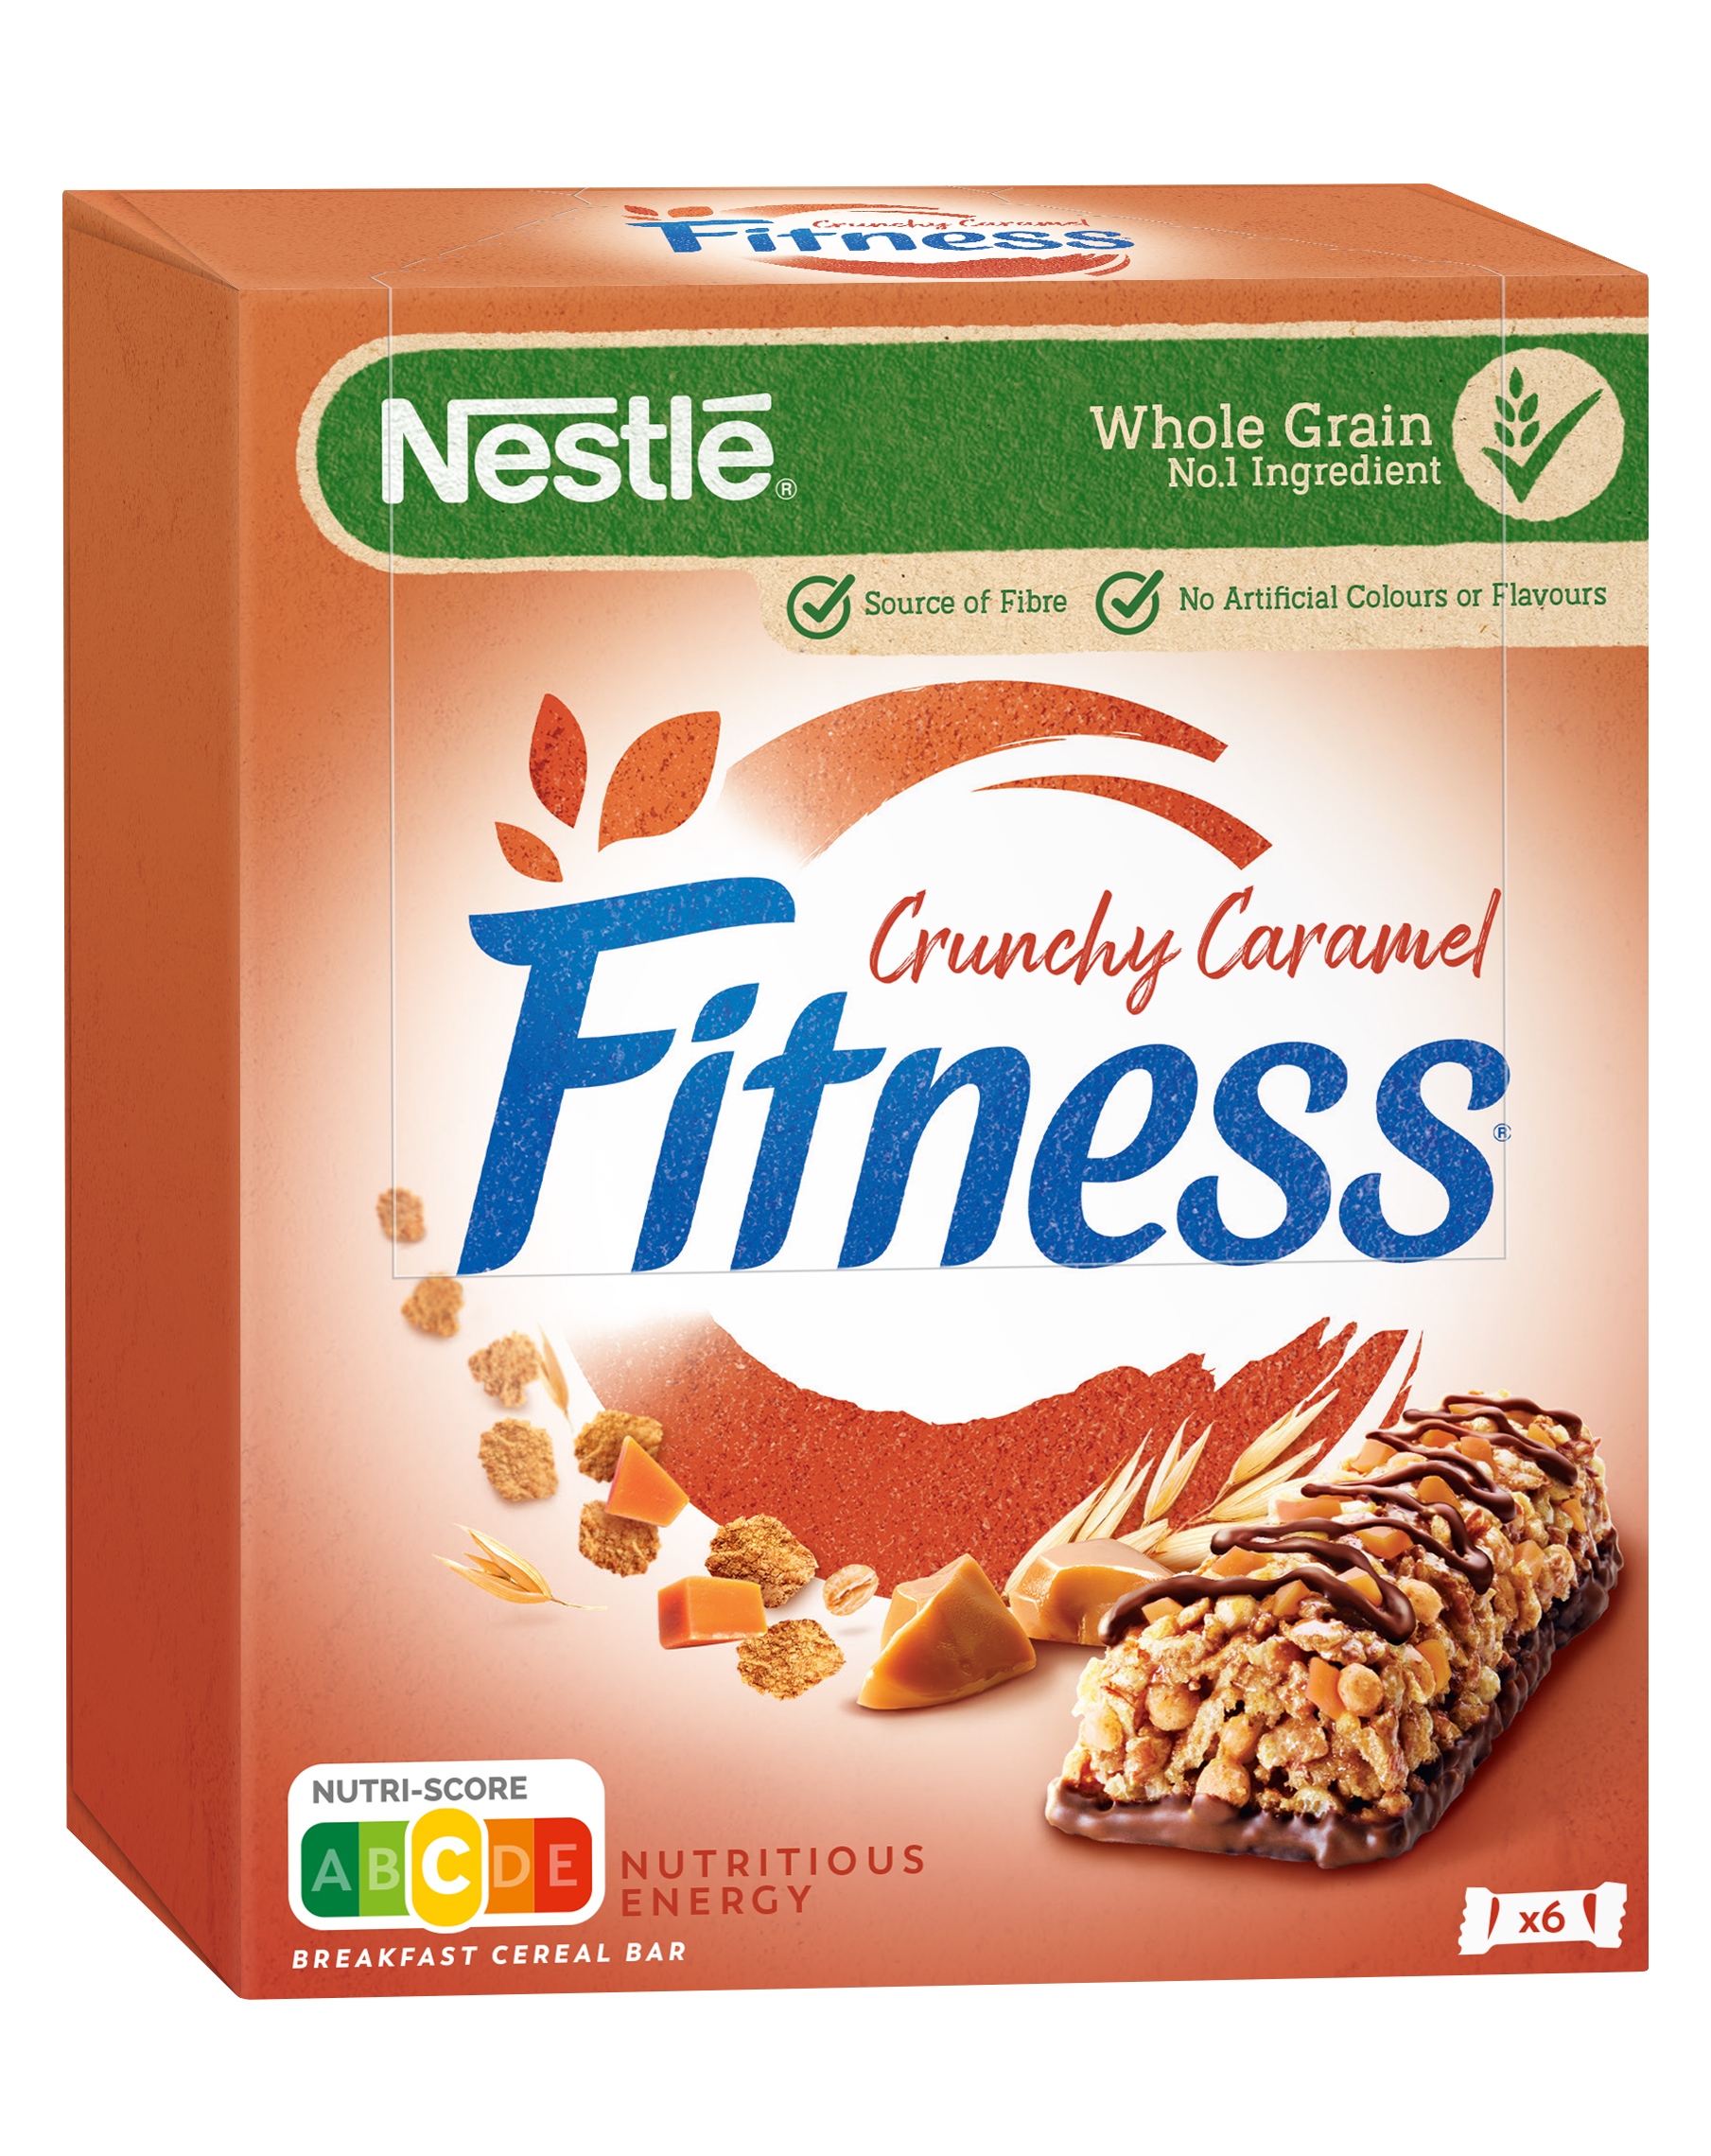 Nestlé FITNESS Breakfast Cereal Bar Crunchy Caramel Pack of 4